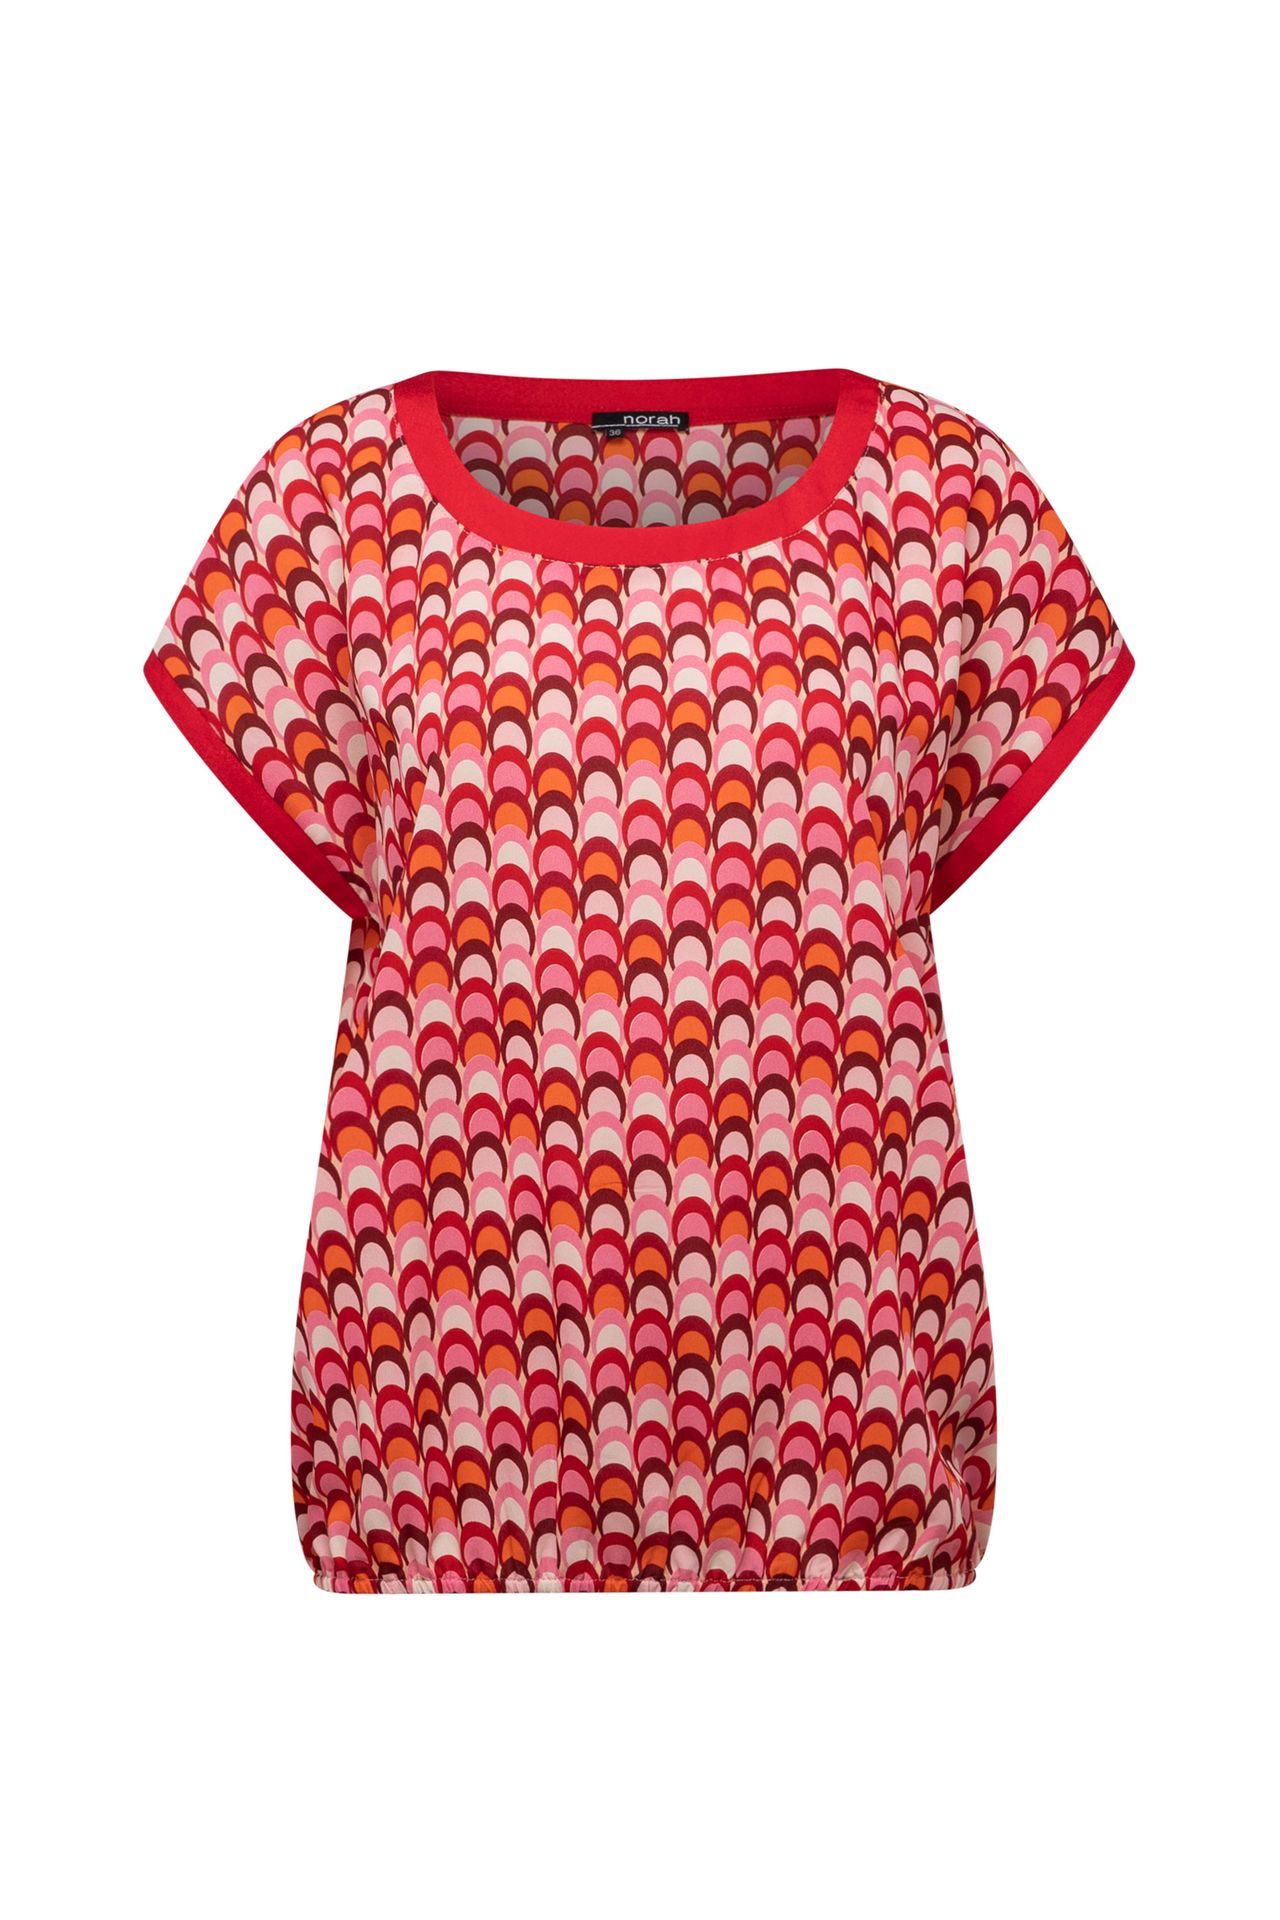 Norah Rood shirt met opvallende print red multicolor 213412-620